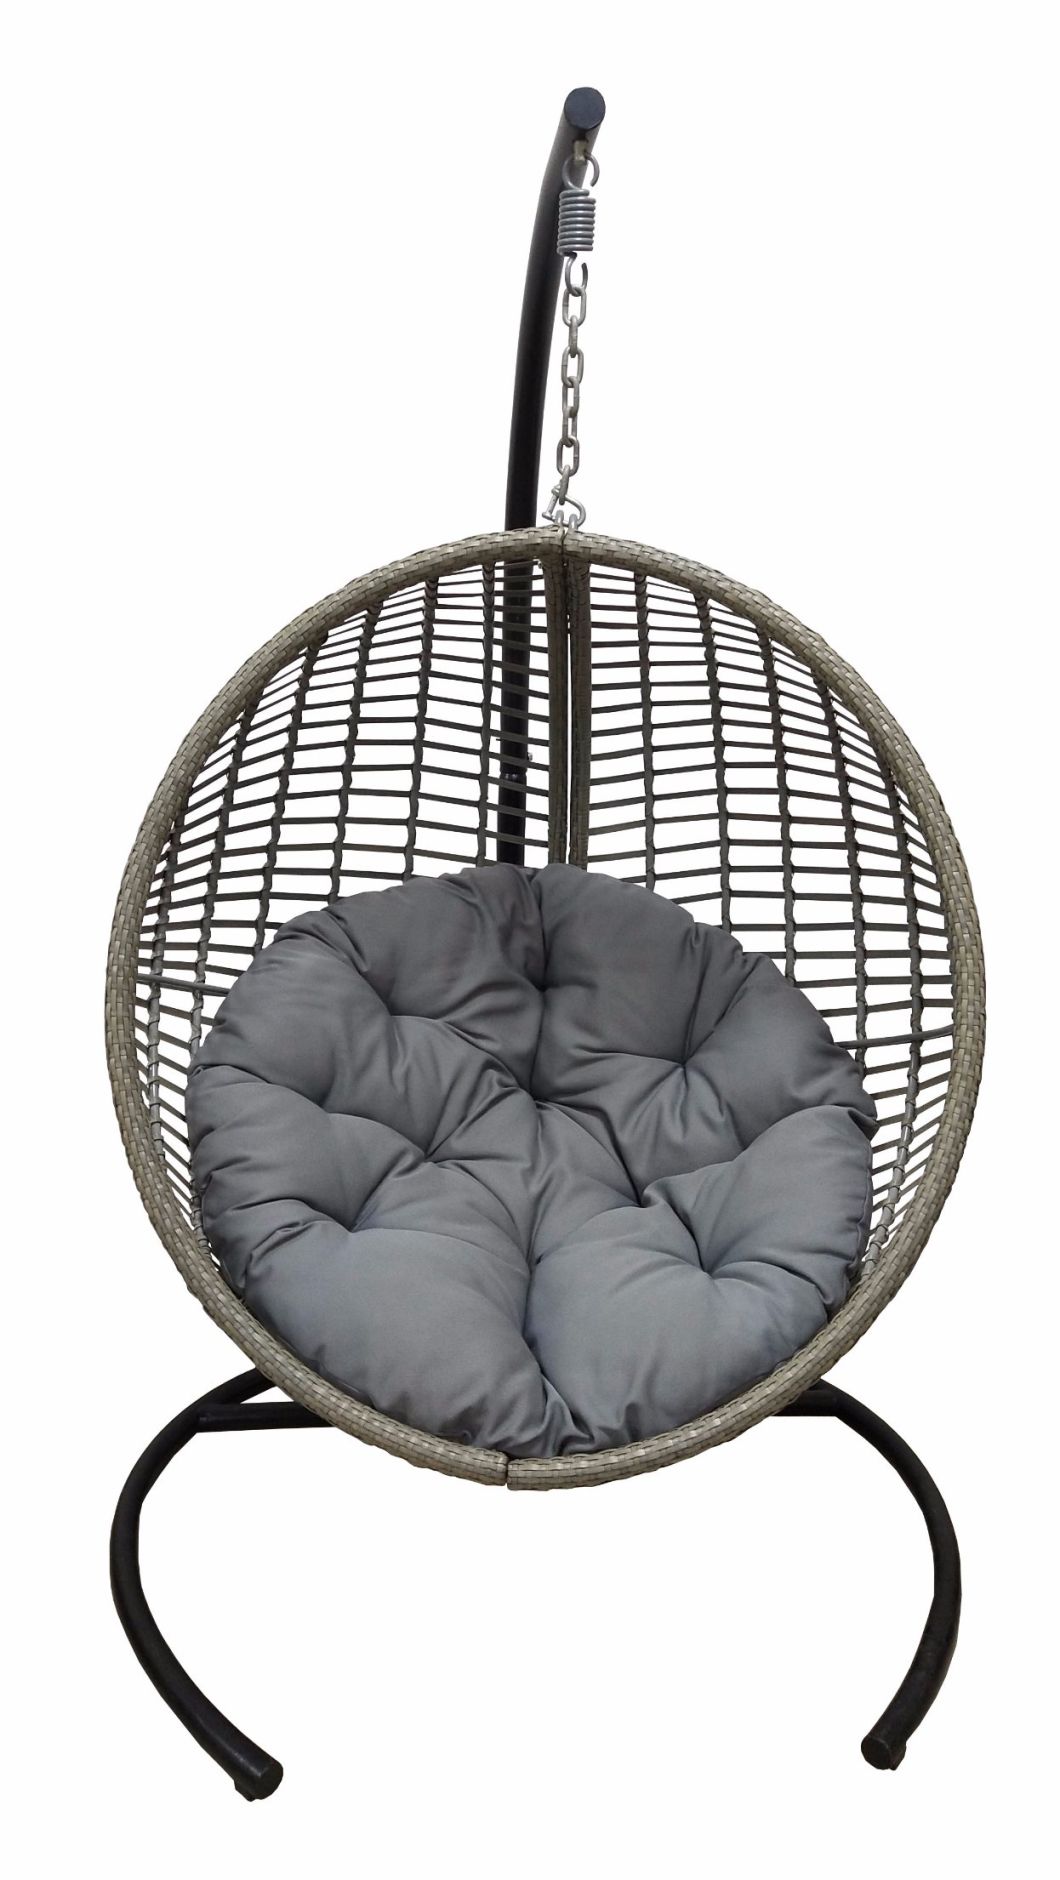 Garden Outdoor Wicker/Rattan Egg Shape Aluminum Frame Hammock Swing Chair